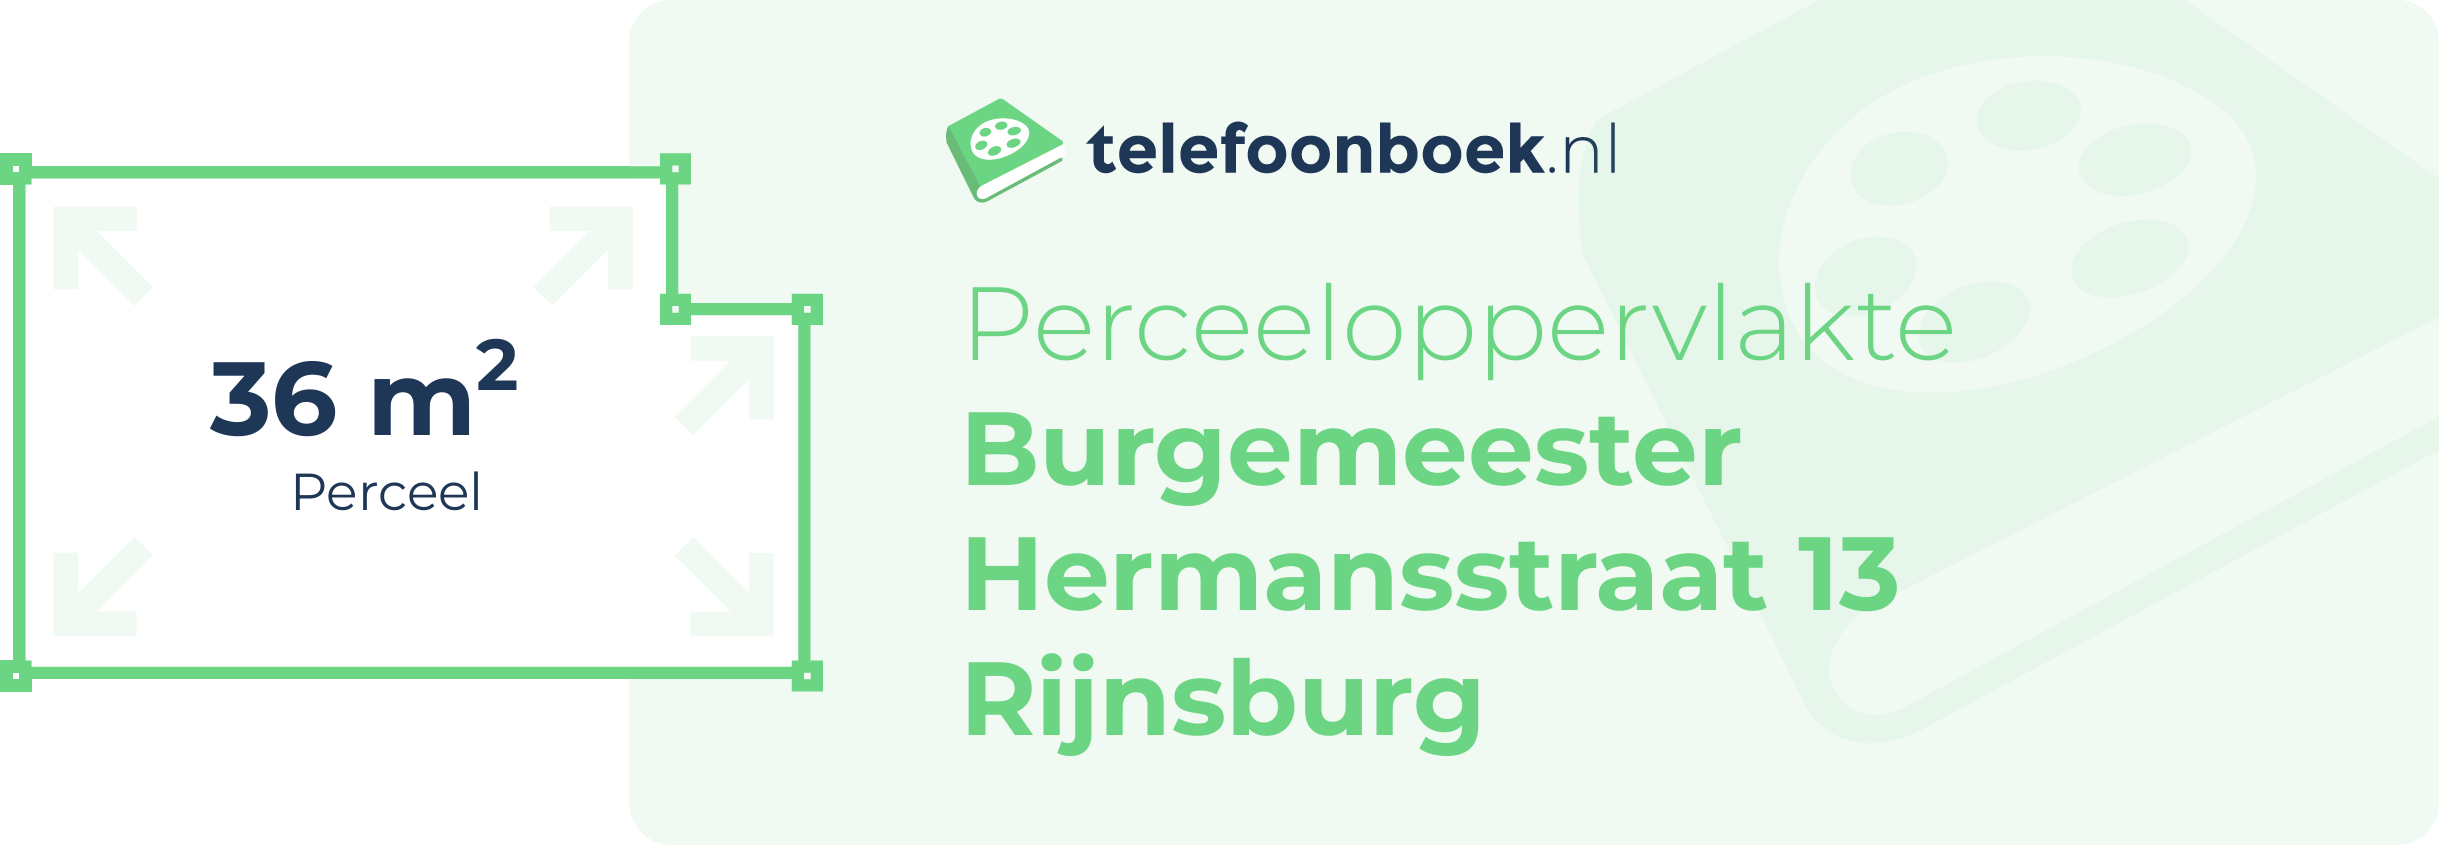 Perceeloppervlakte Burgemeester Hermansstraat 13 Rijnsburg